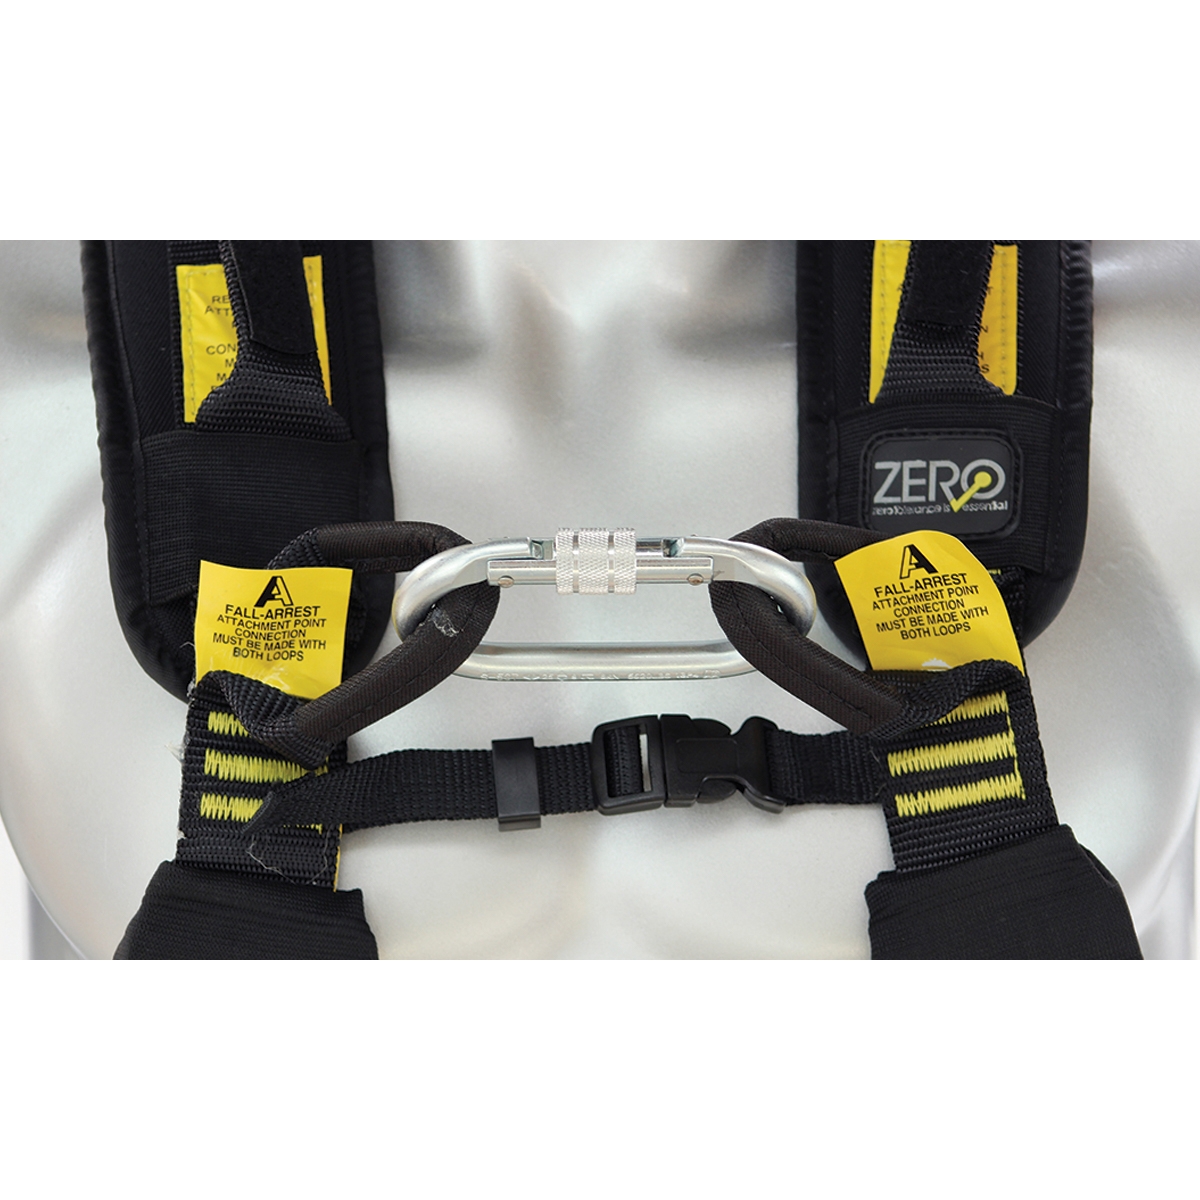 ZERO Rigger Lightweight Harness Z+87/R HTP1679